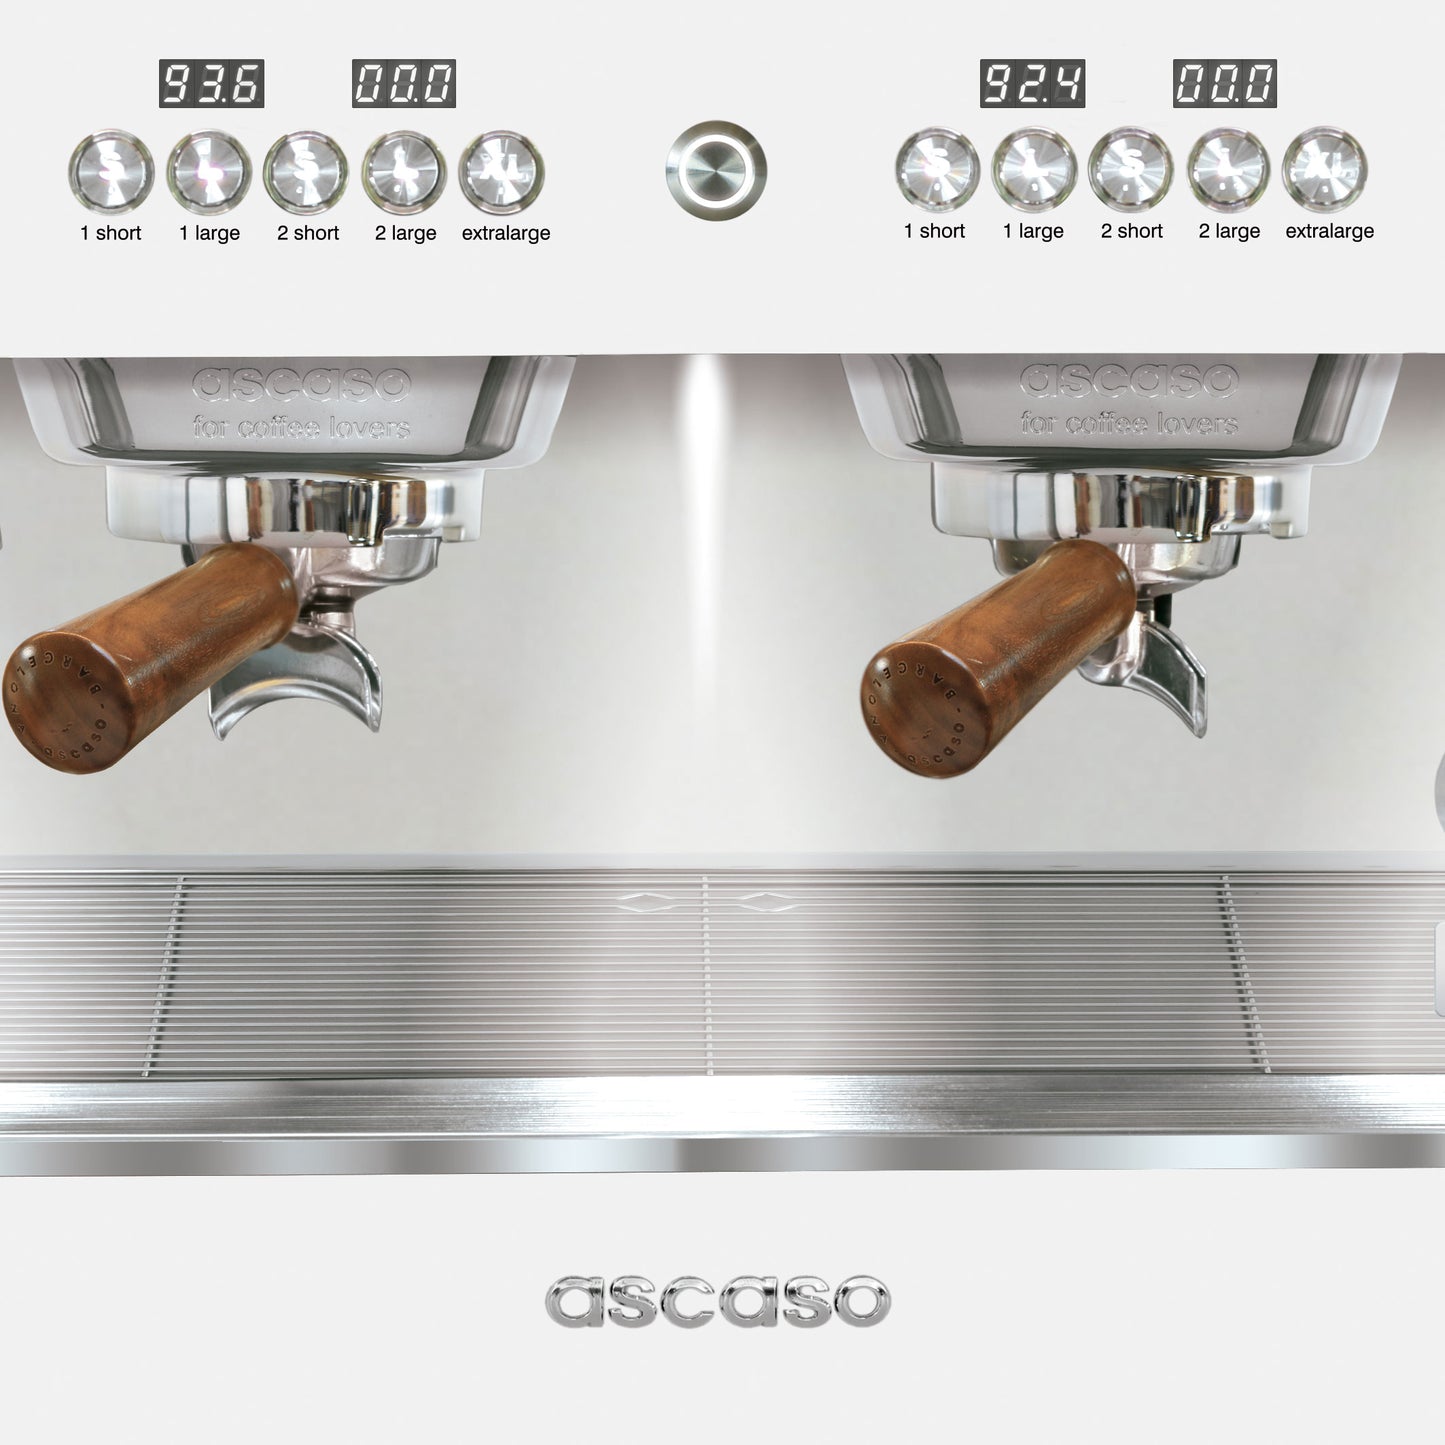 Barista T Plus, Automatic 3 Group Espresso Machine, with Thermodynamic Technology (White)